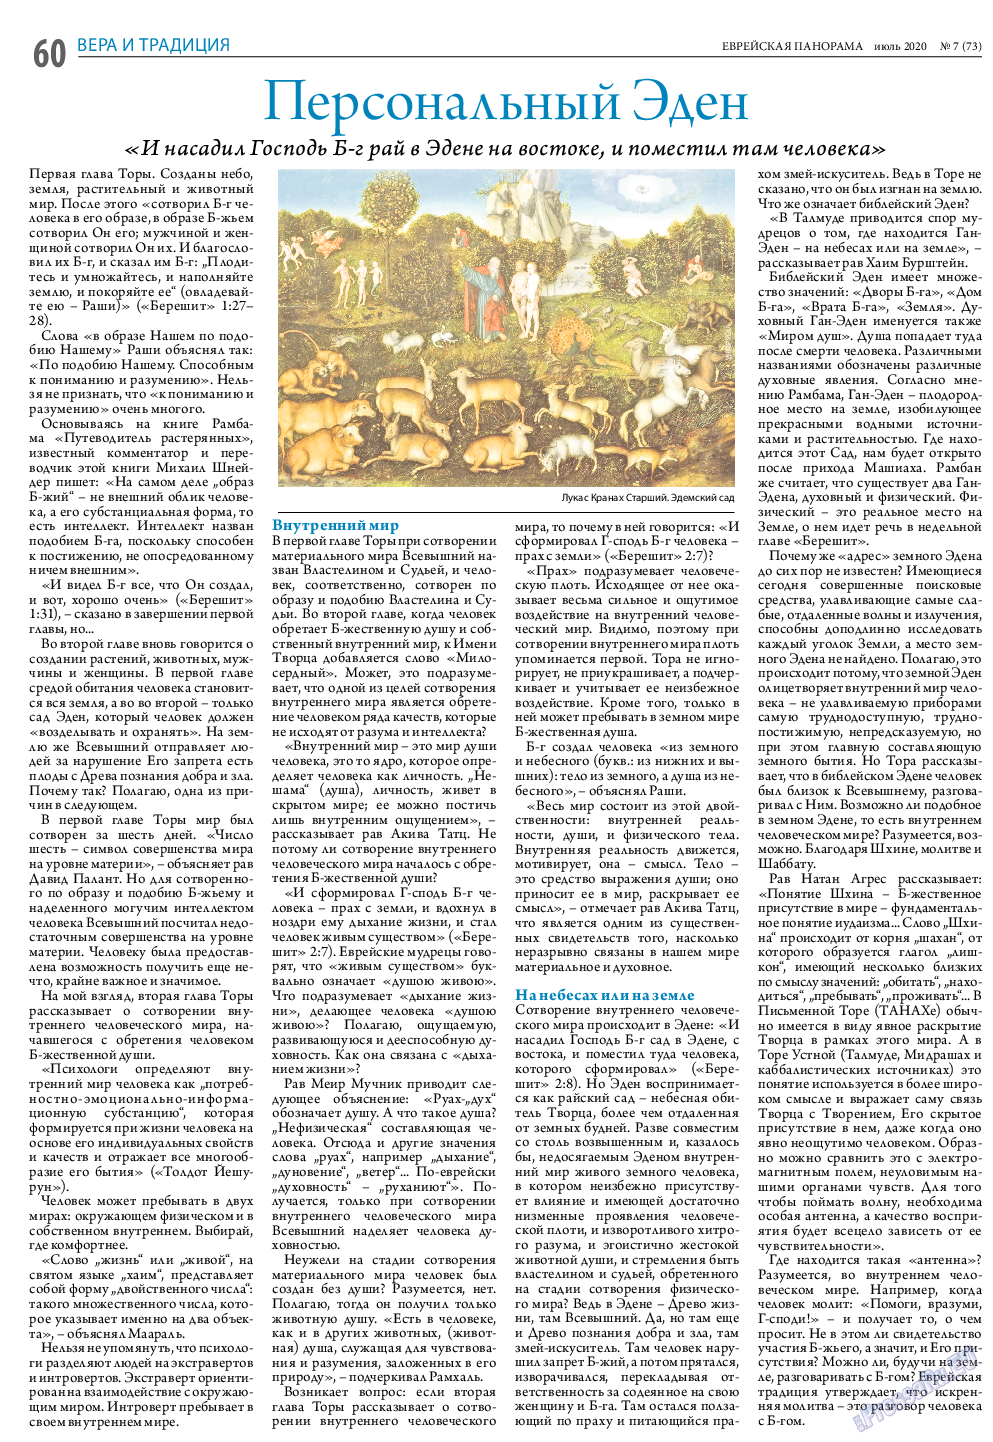 Еврейская панорама, газета. 2020 №7 стр.60